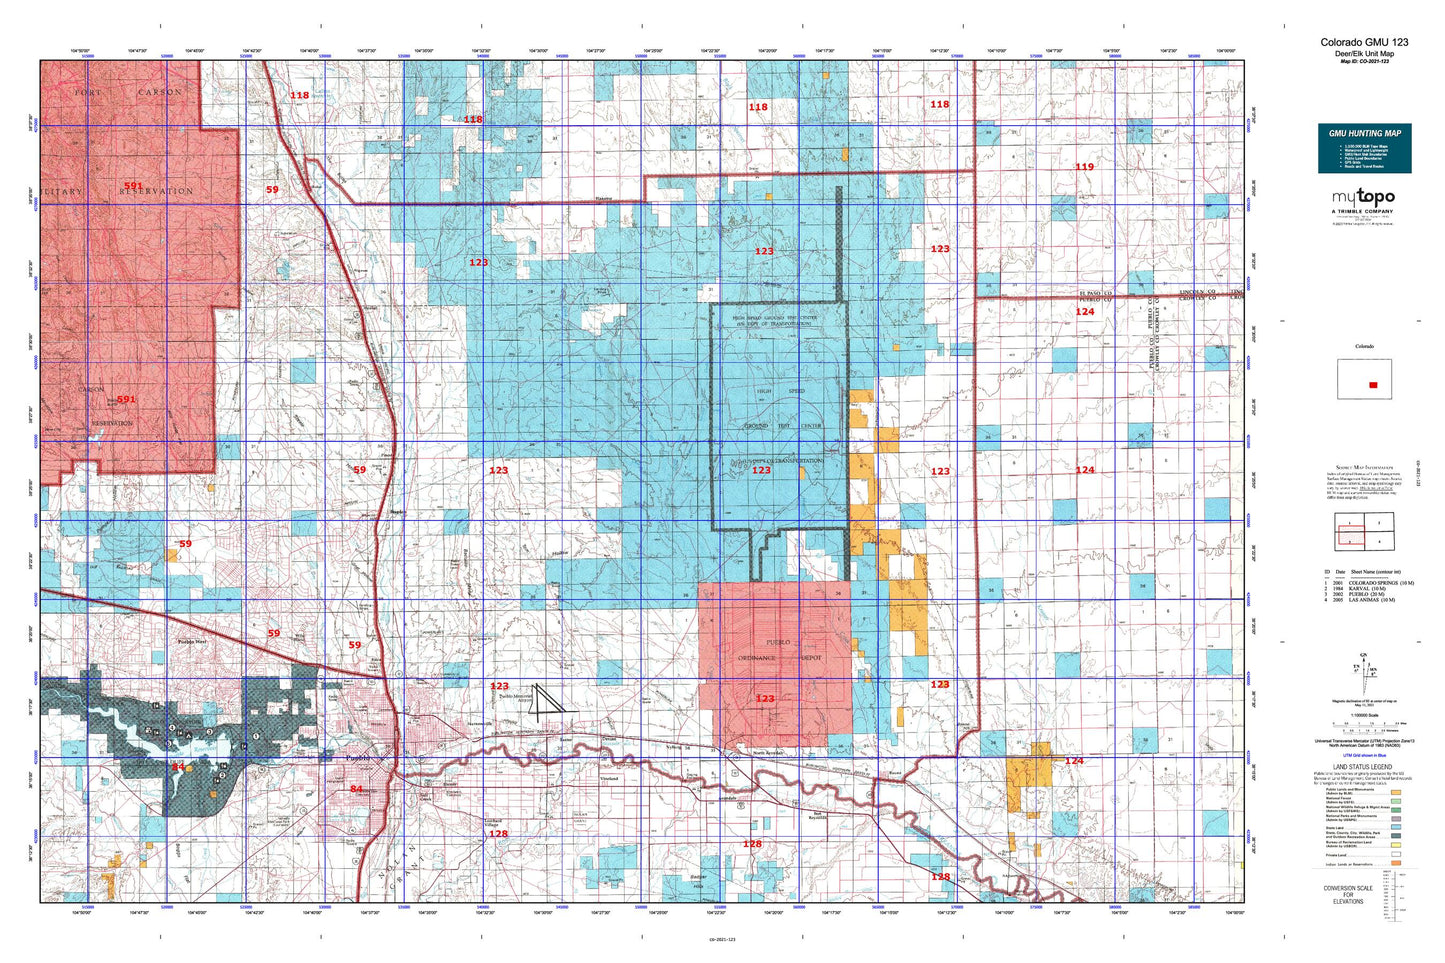 Colorado GMU 123 Map Image